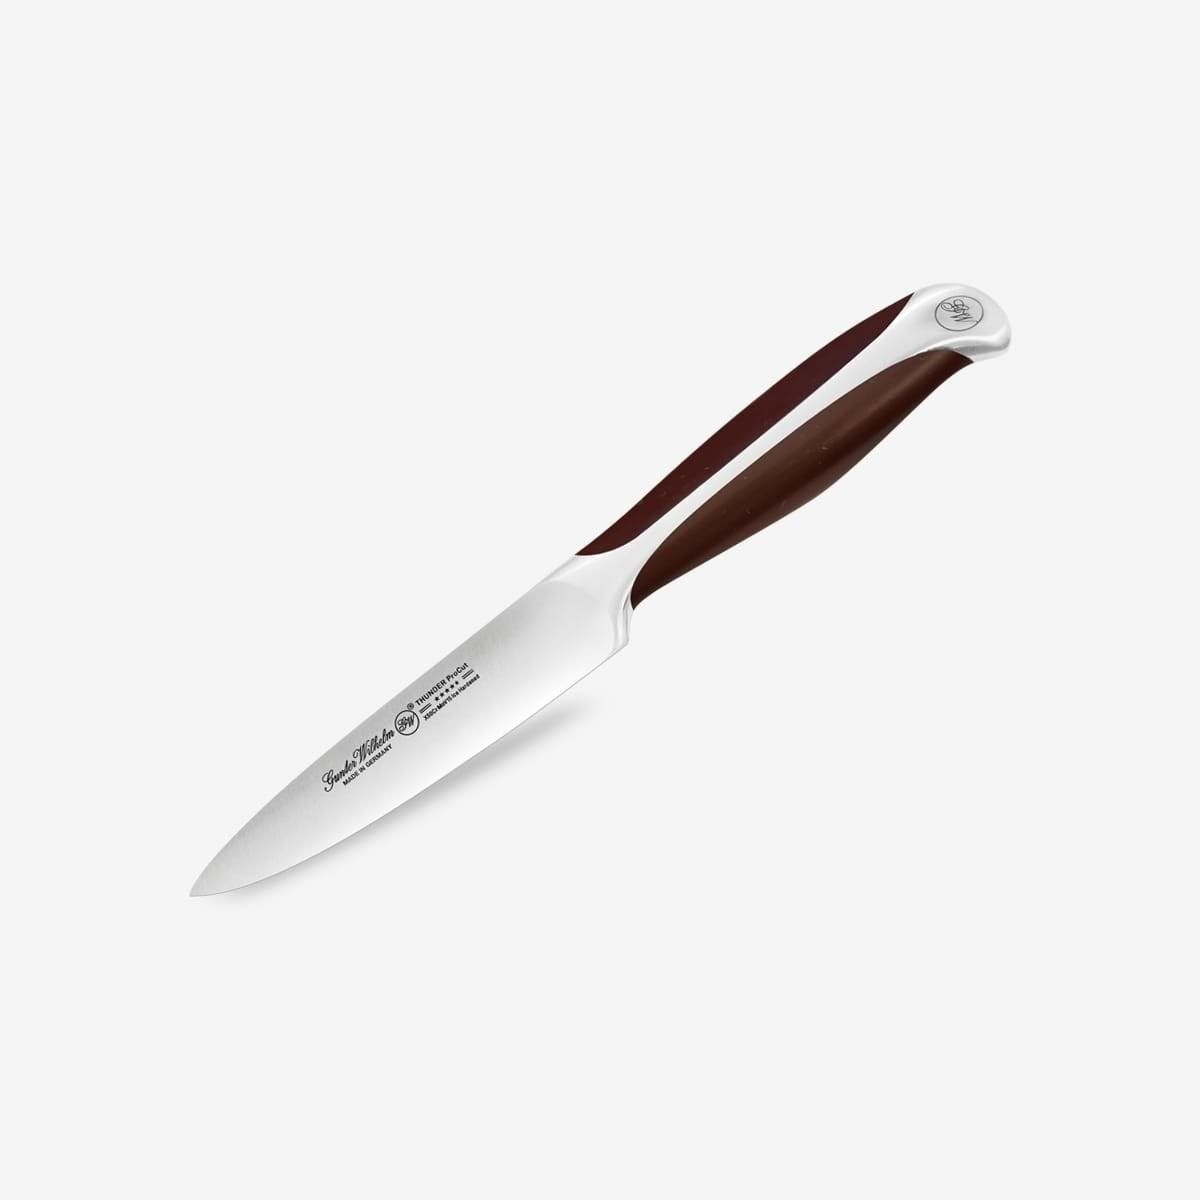 Gunter Wilhelm Thunder Paring Knife, 3.5 Inch | Brownish ABS Handle SKU: 50-511-0135